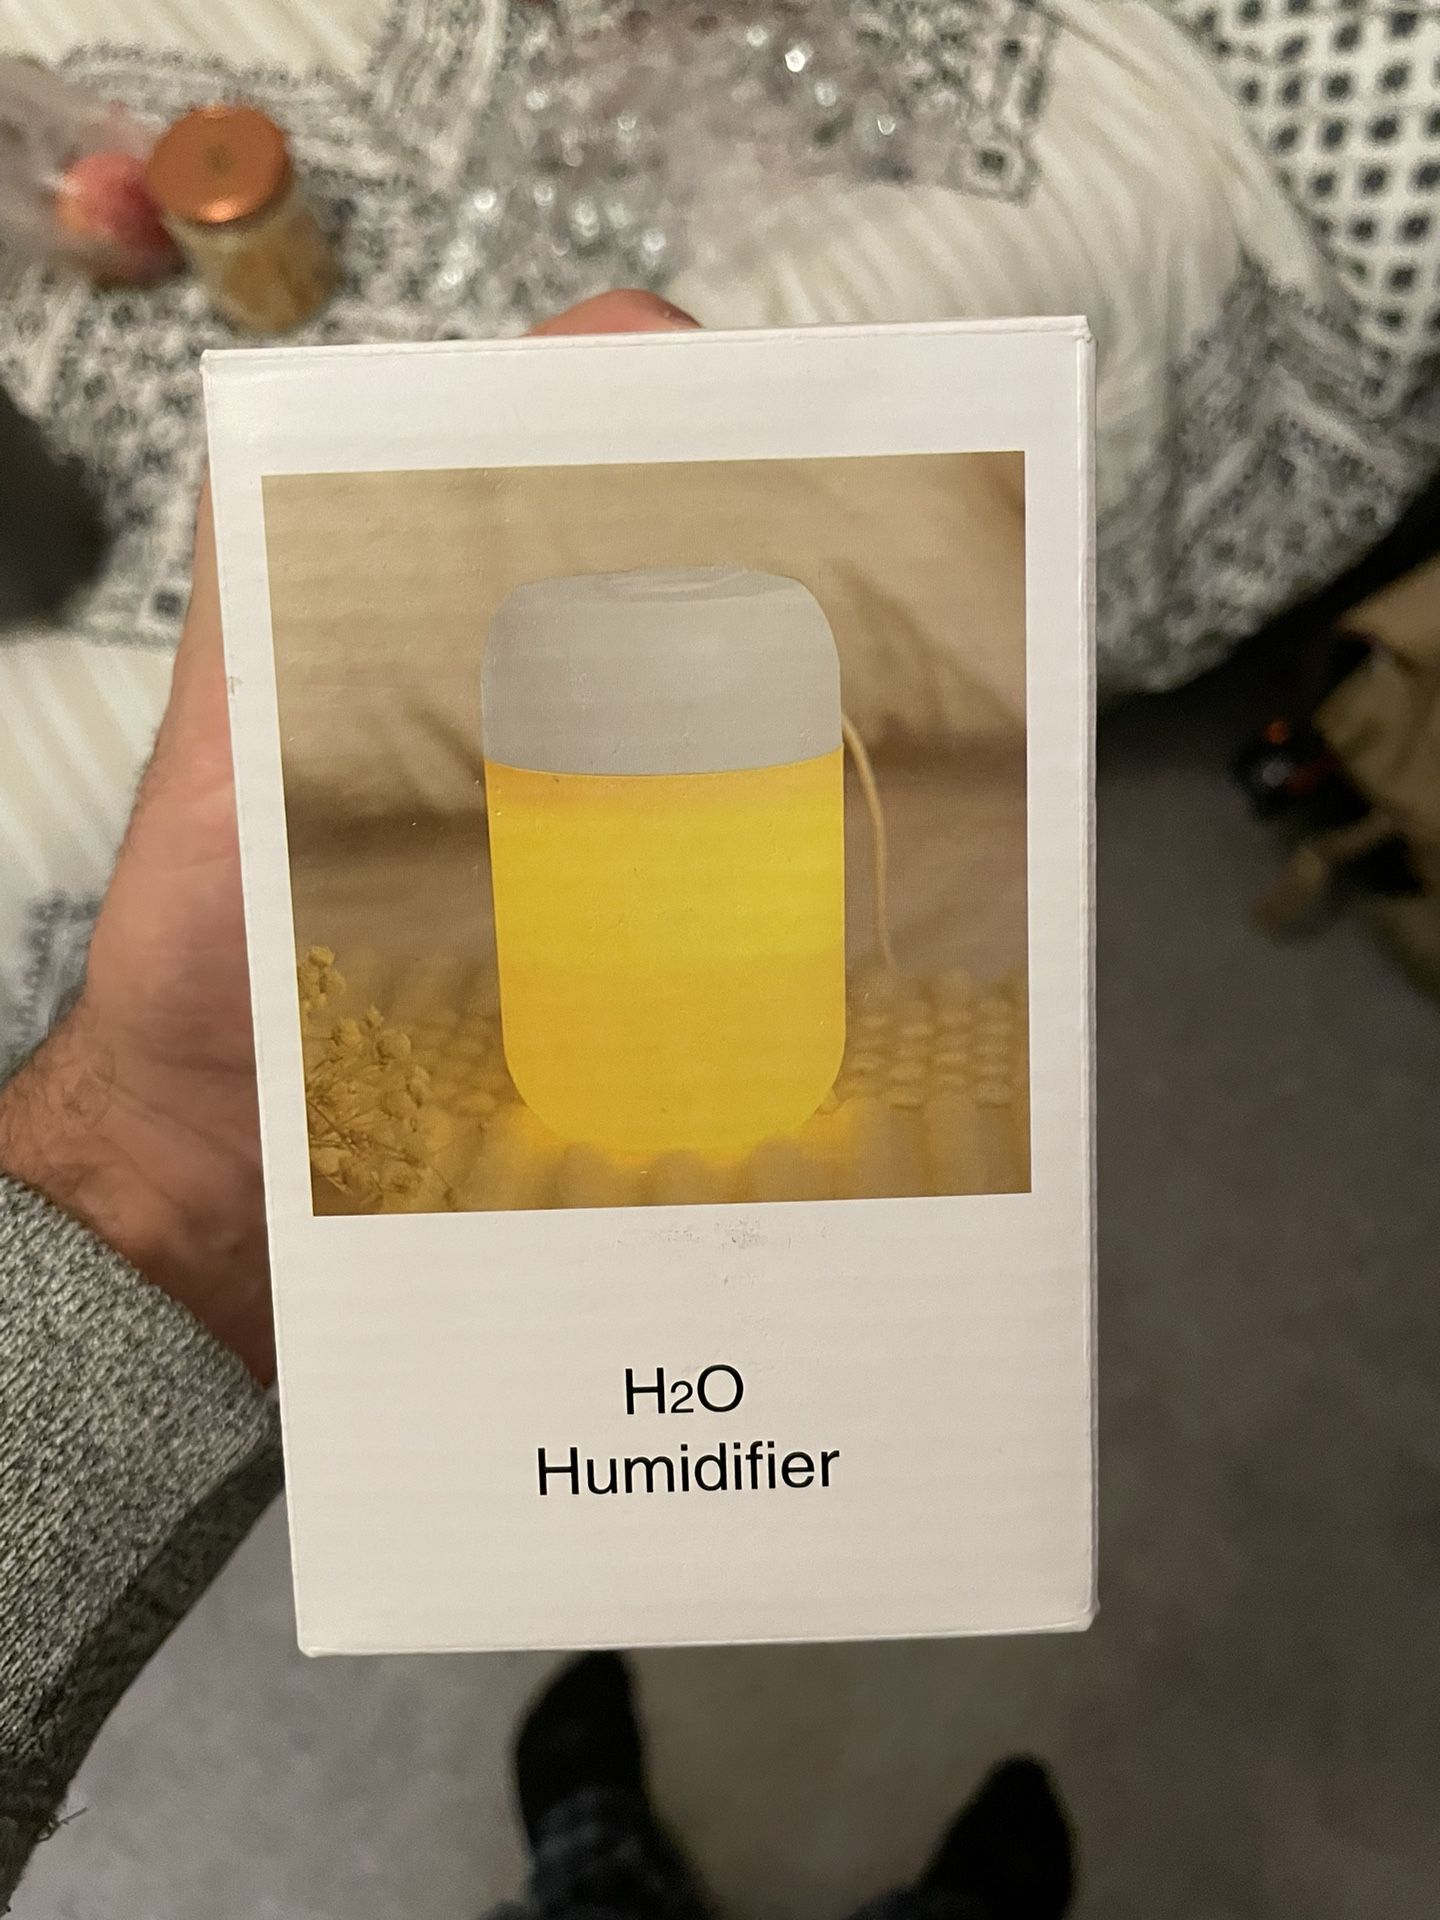 mini humidifier and night light $20 obo